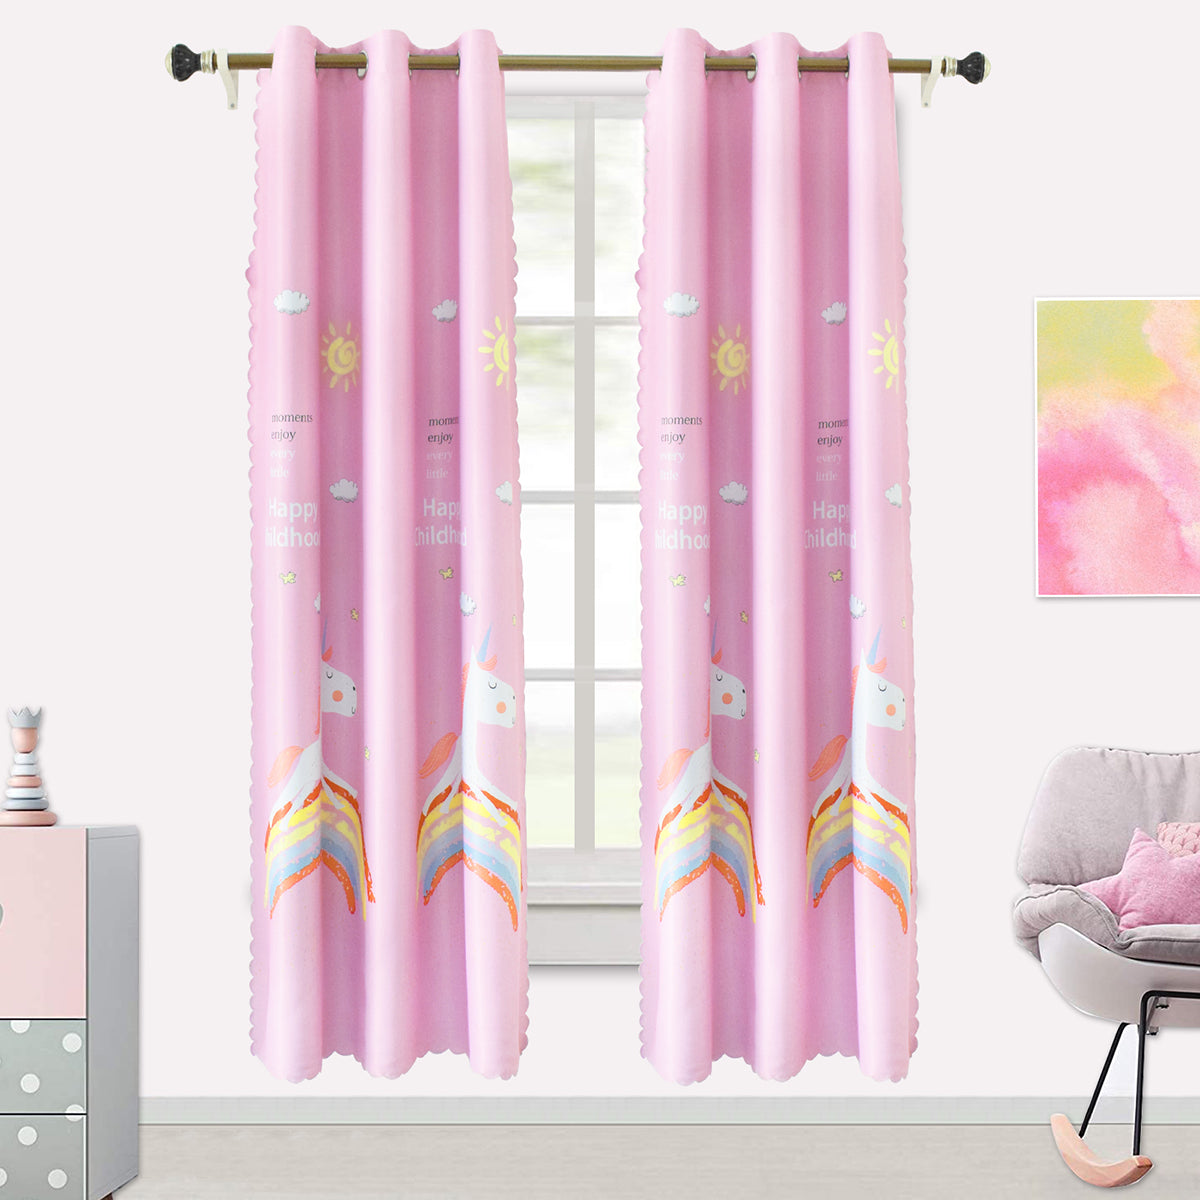 Unicorn Cartoon Curtains, 1 Panel, Pink, 110*130cm/110*160cm/110*190cm